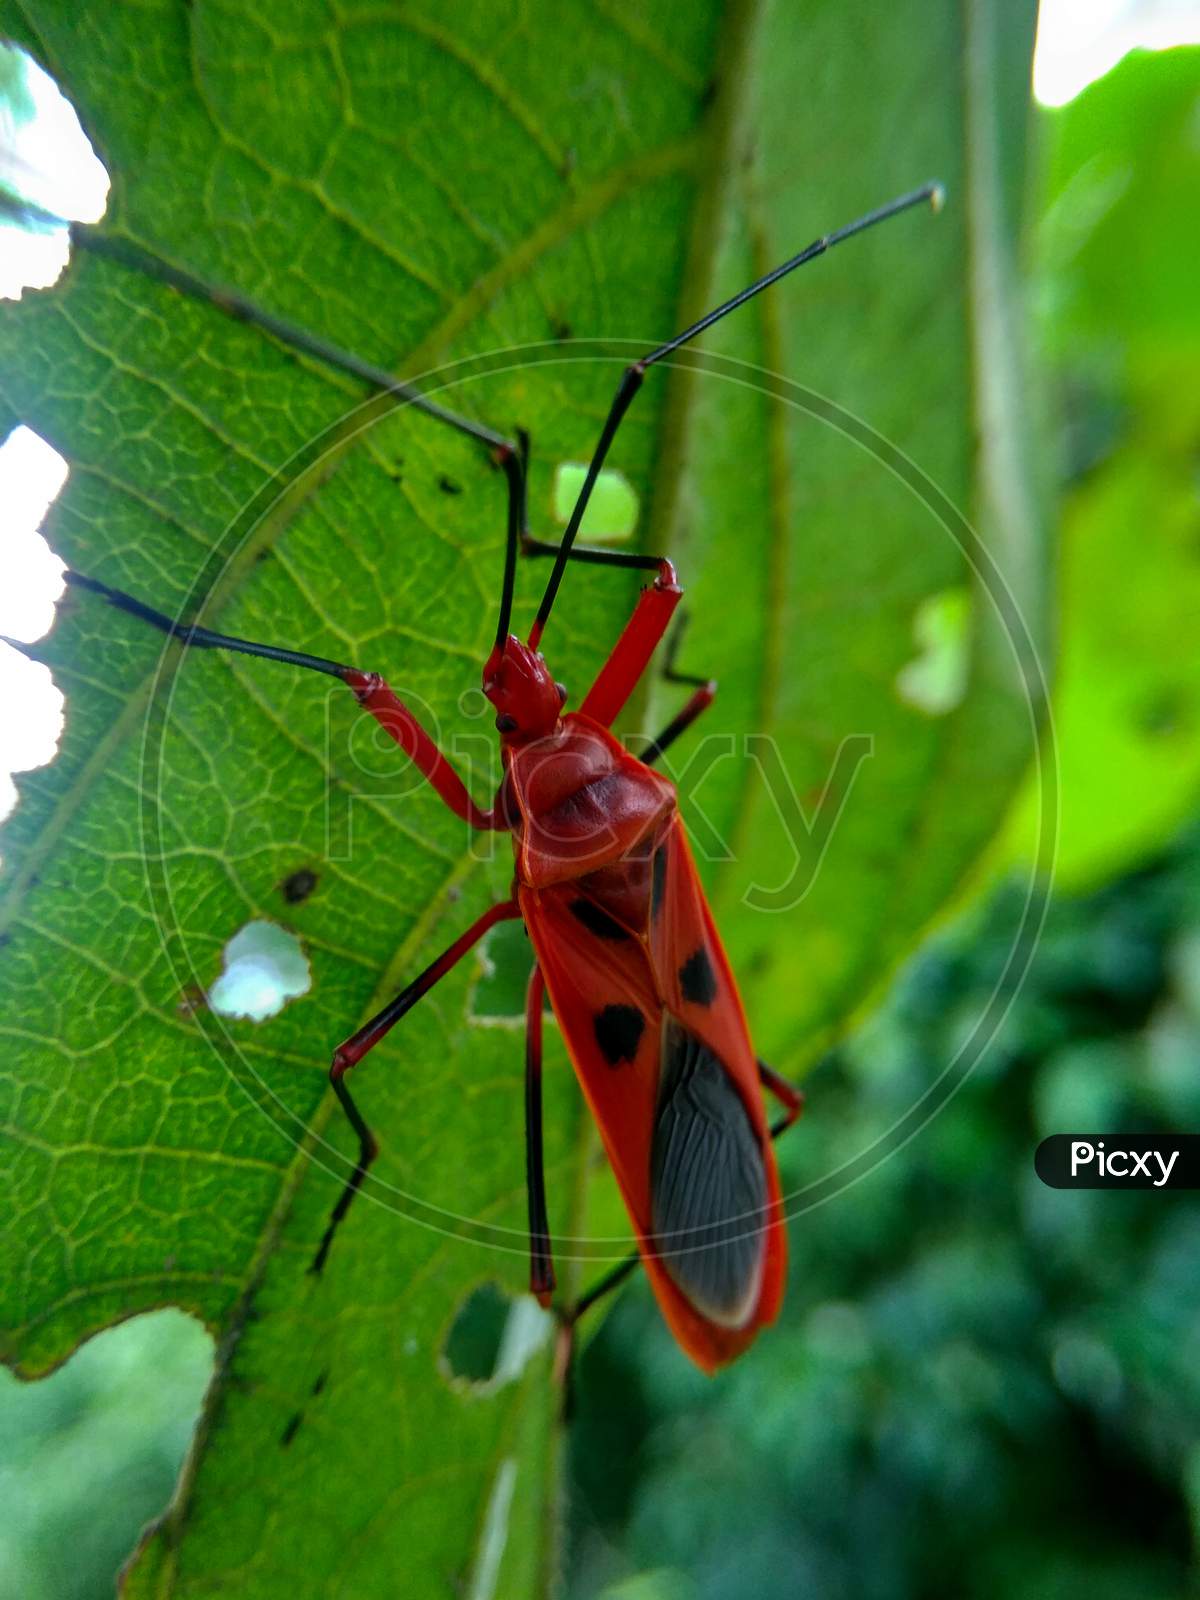 A ladybug beetle under the leaf surface